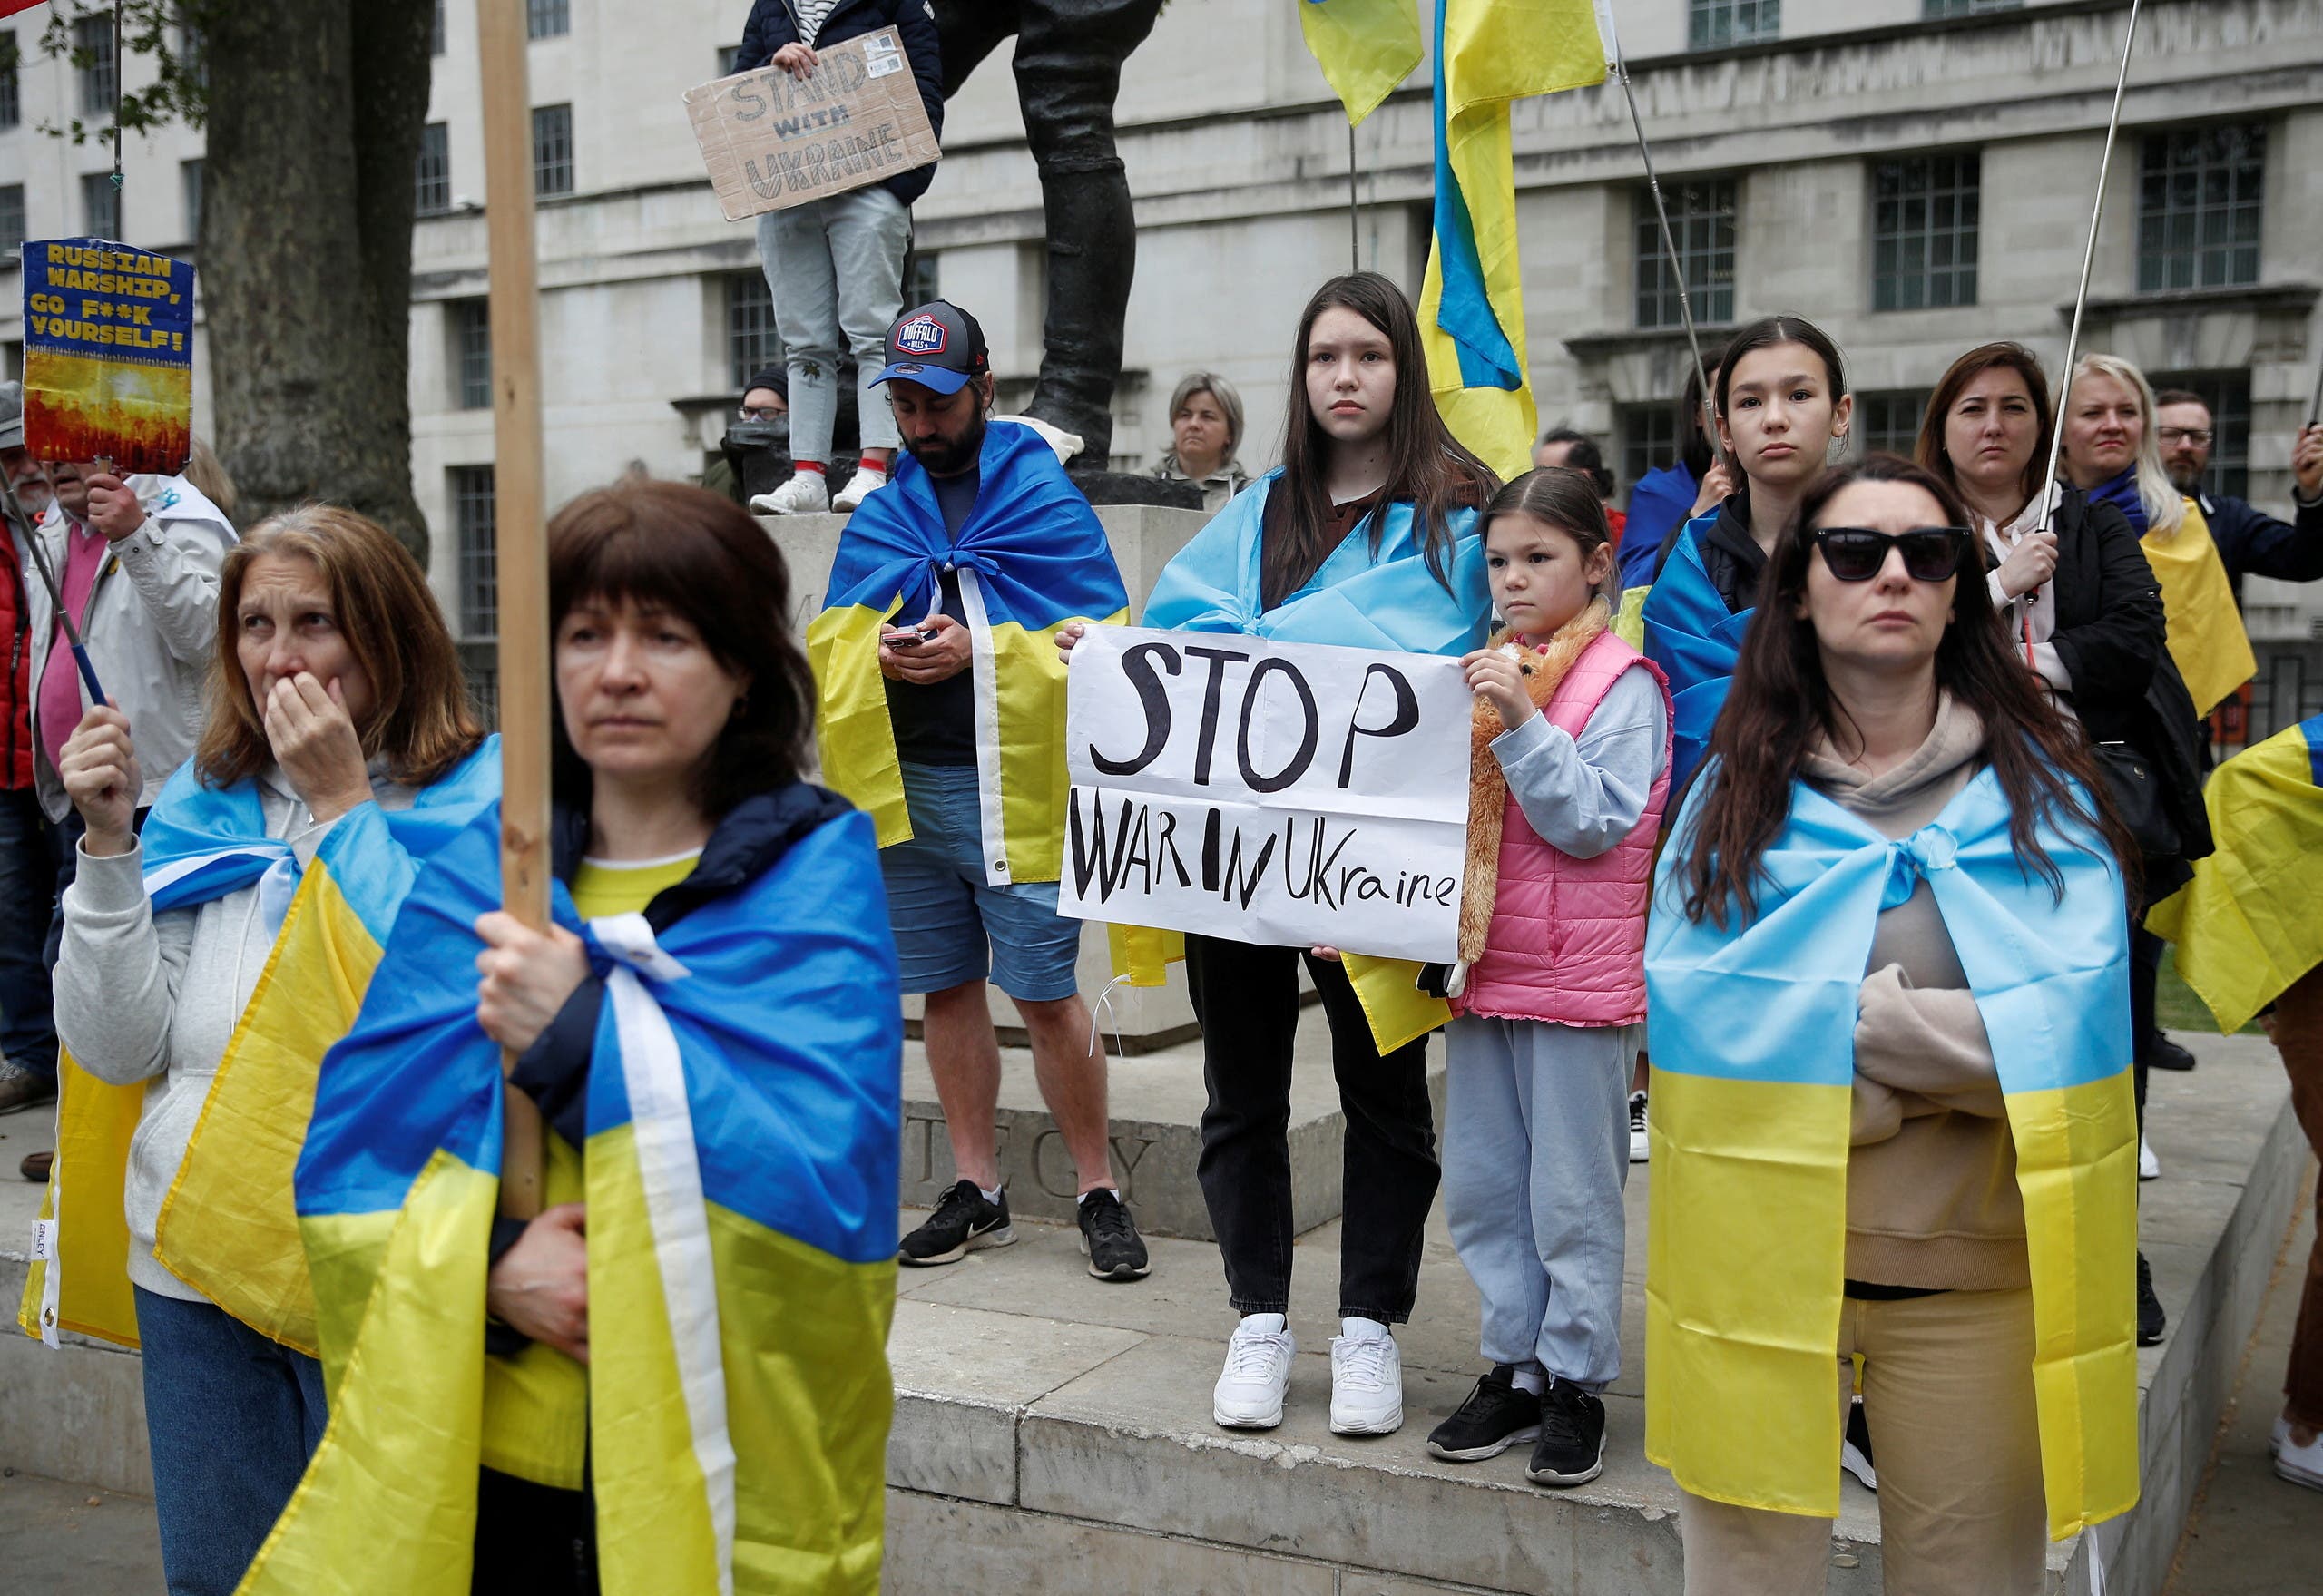 A pro-Ukrainian demonstration in London in early May